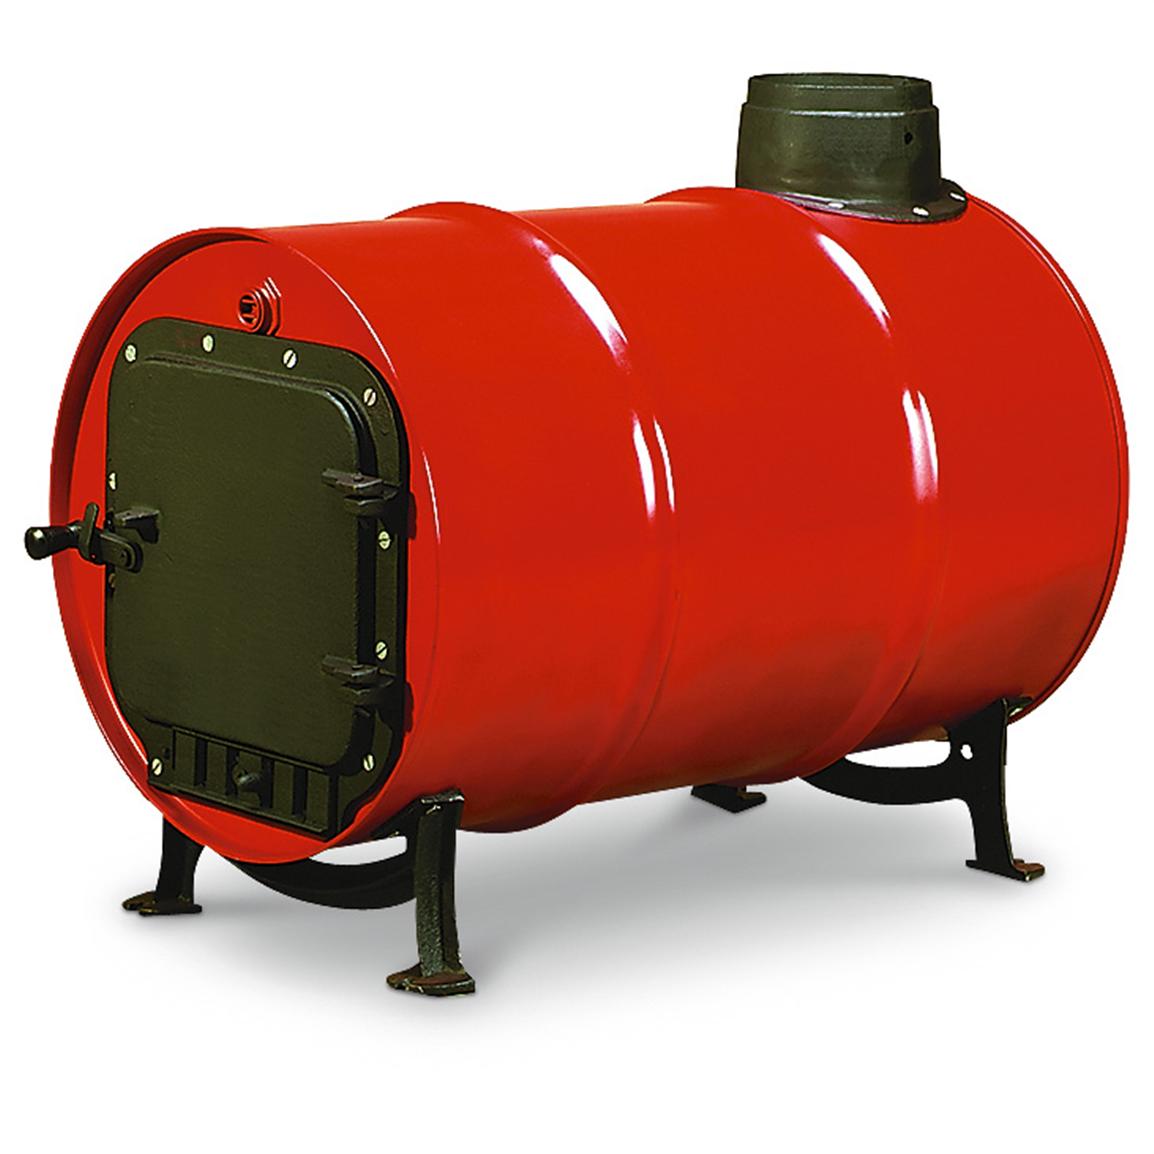 ussc-cast-iron-barrel-stove-kit-172143-wood-pellet-stoves-at